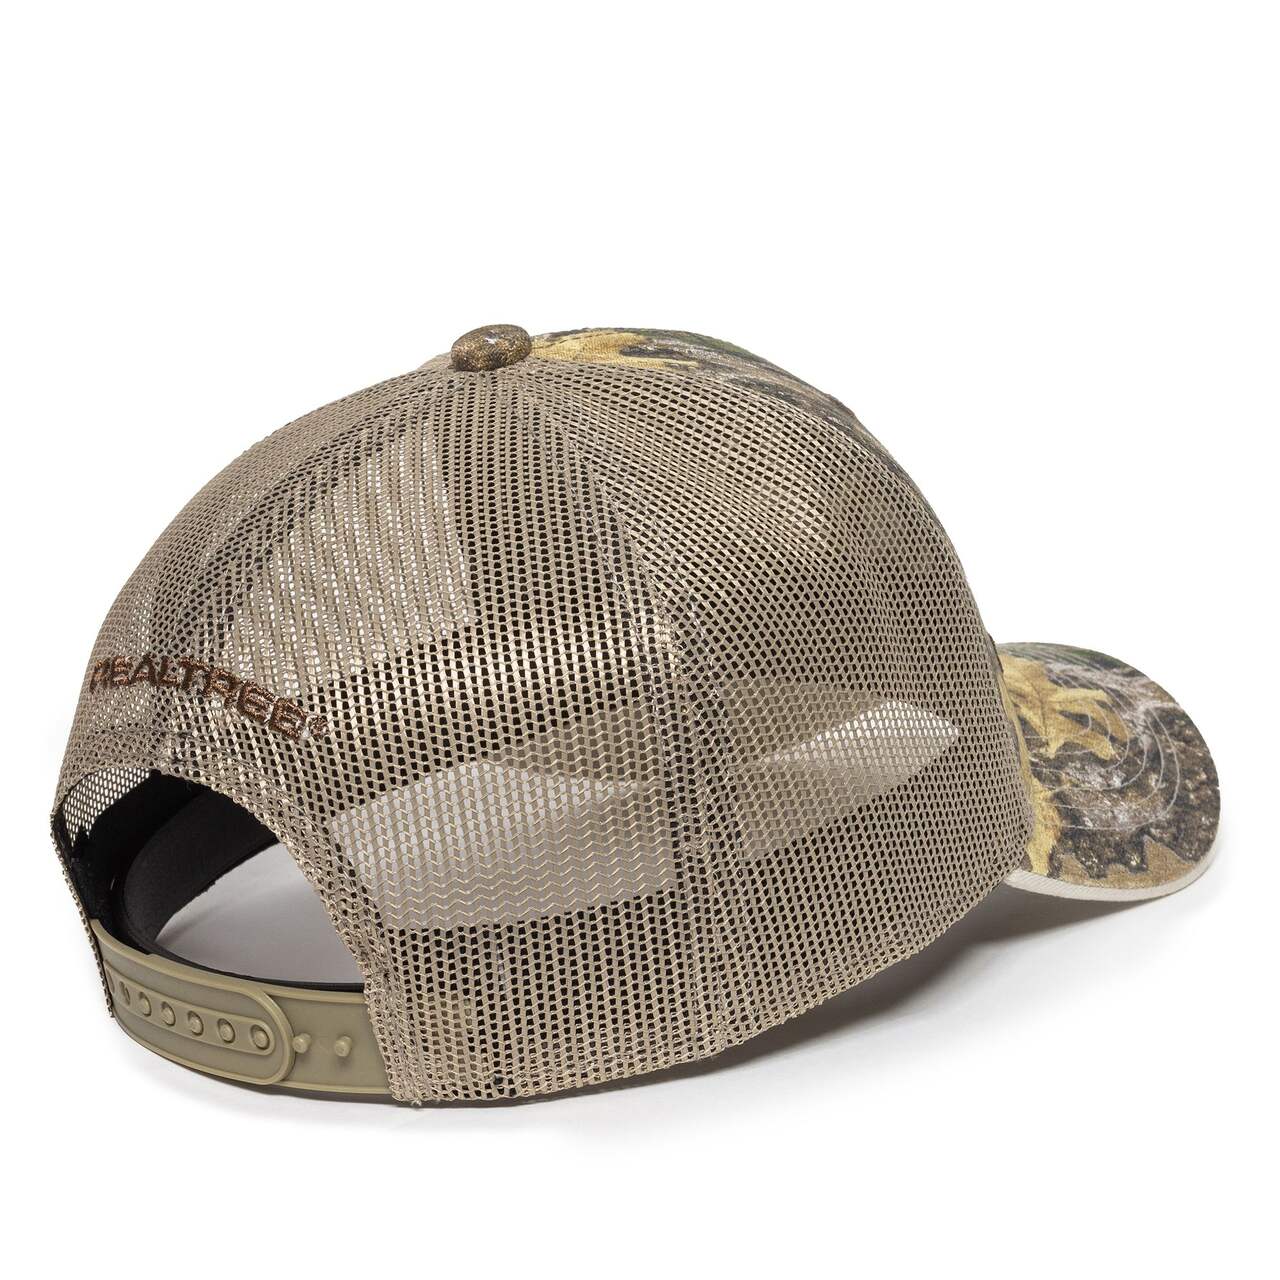 Realtree Hunting Structured Baseball Style Hat, Edge Camo, Small / Medium